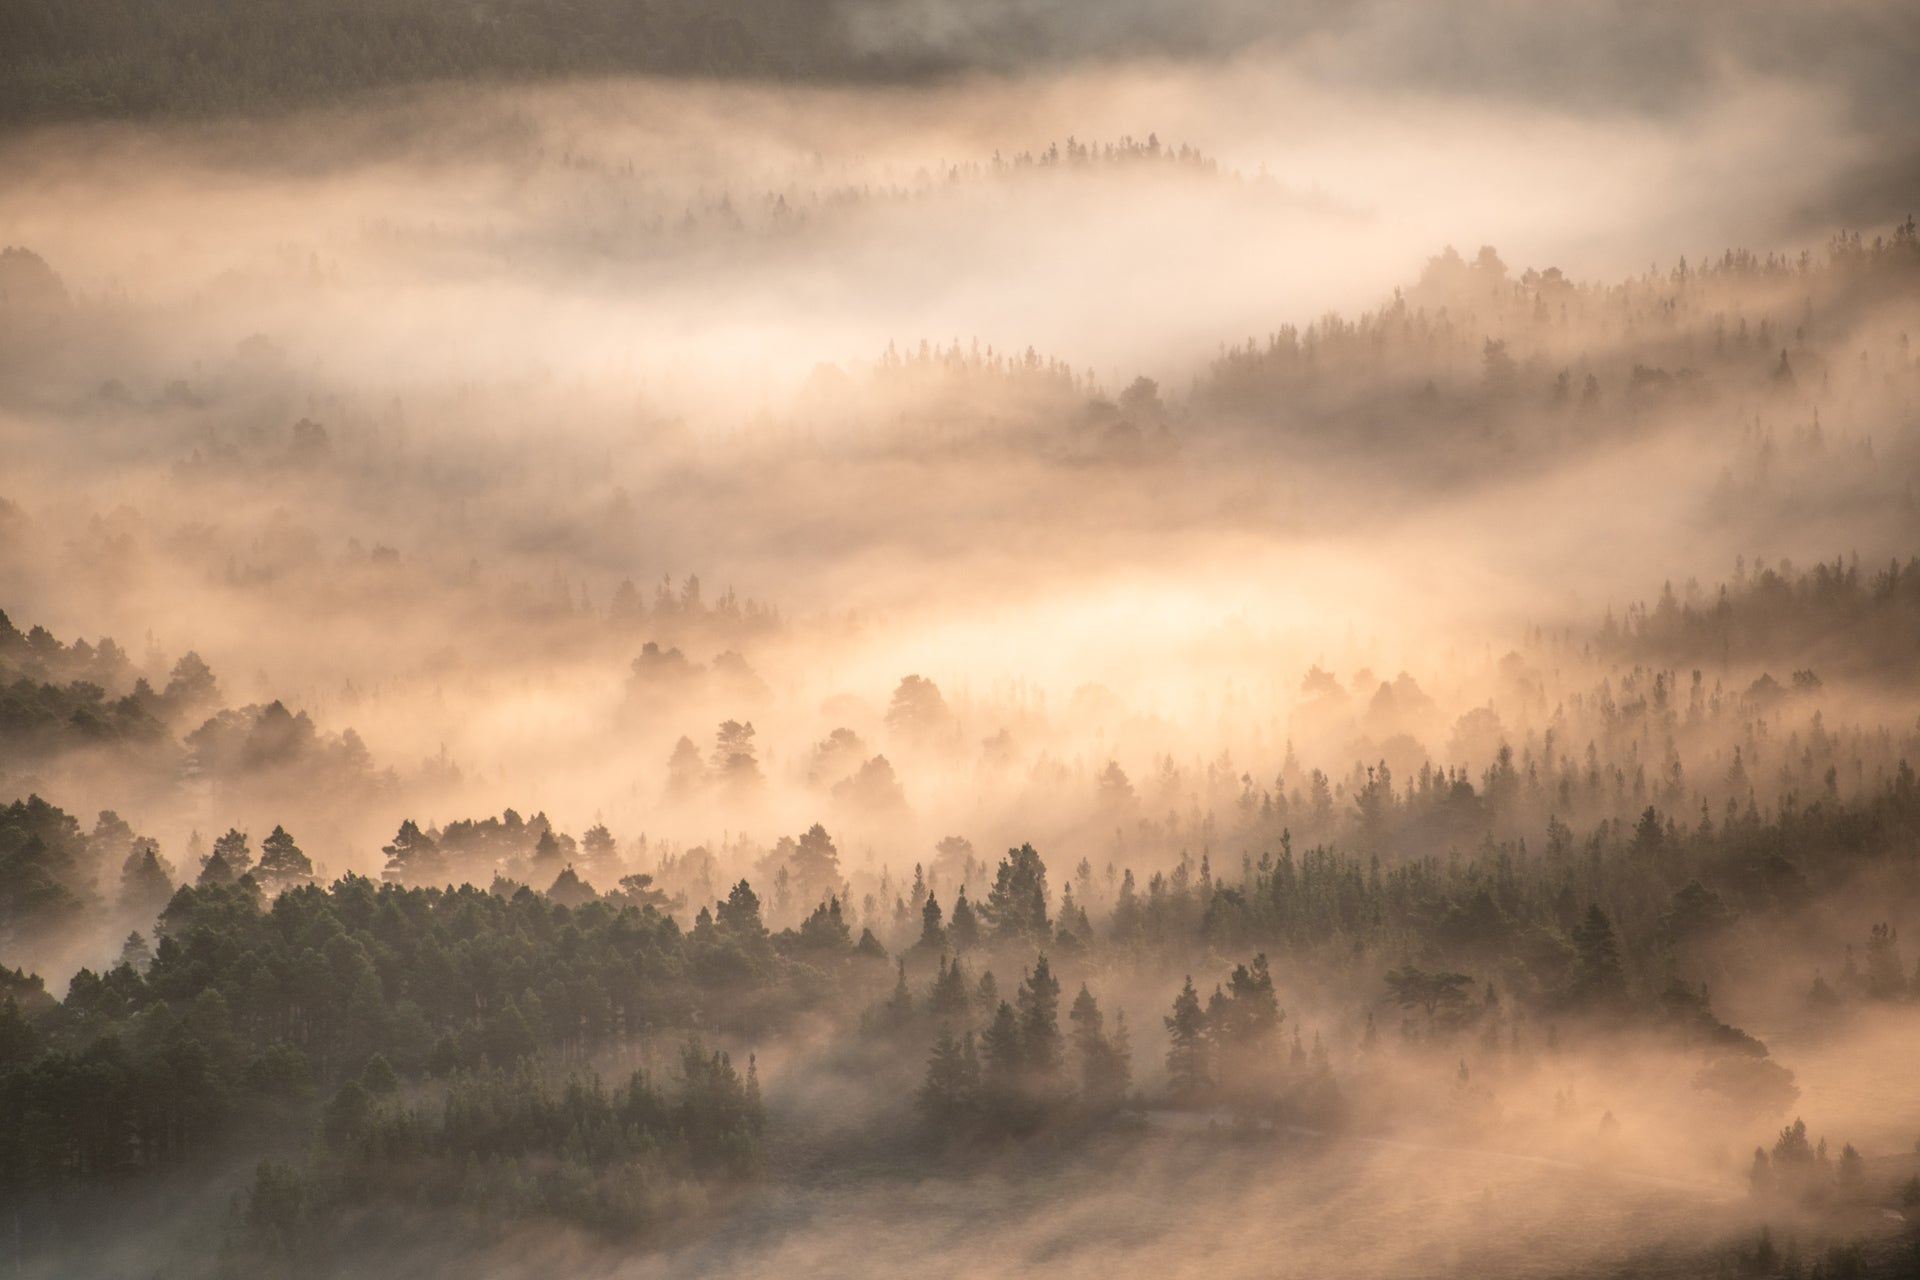 Abernethy Forest in Cairngorm National Park, Scotland. (Photo: Graham Niven)